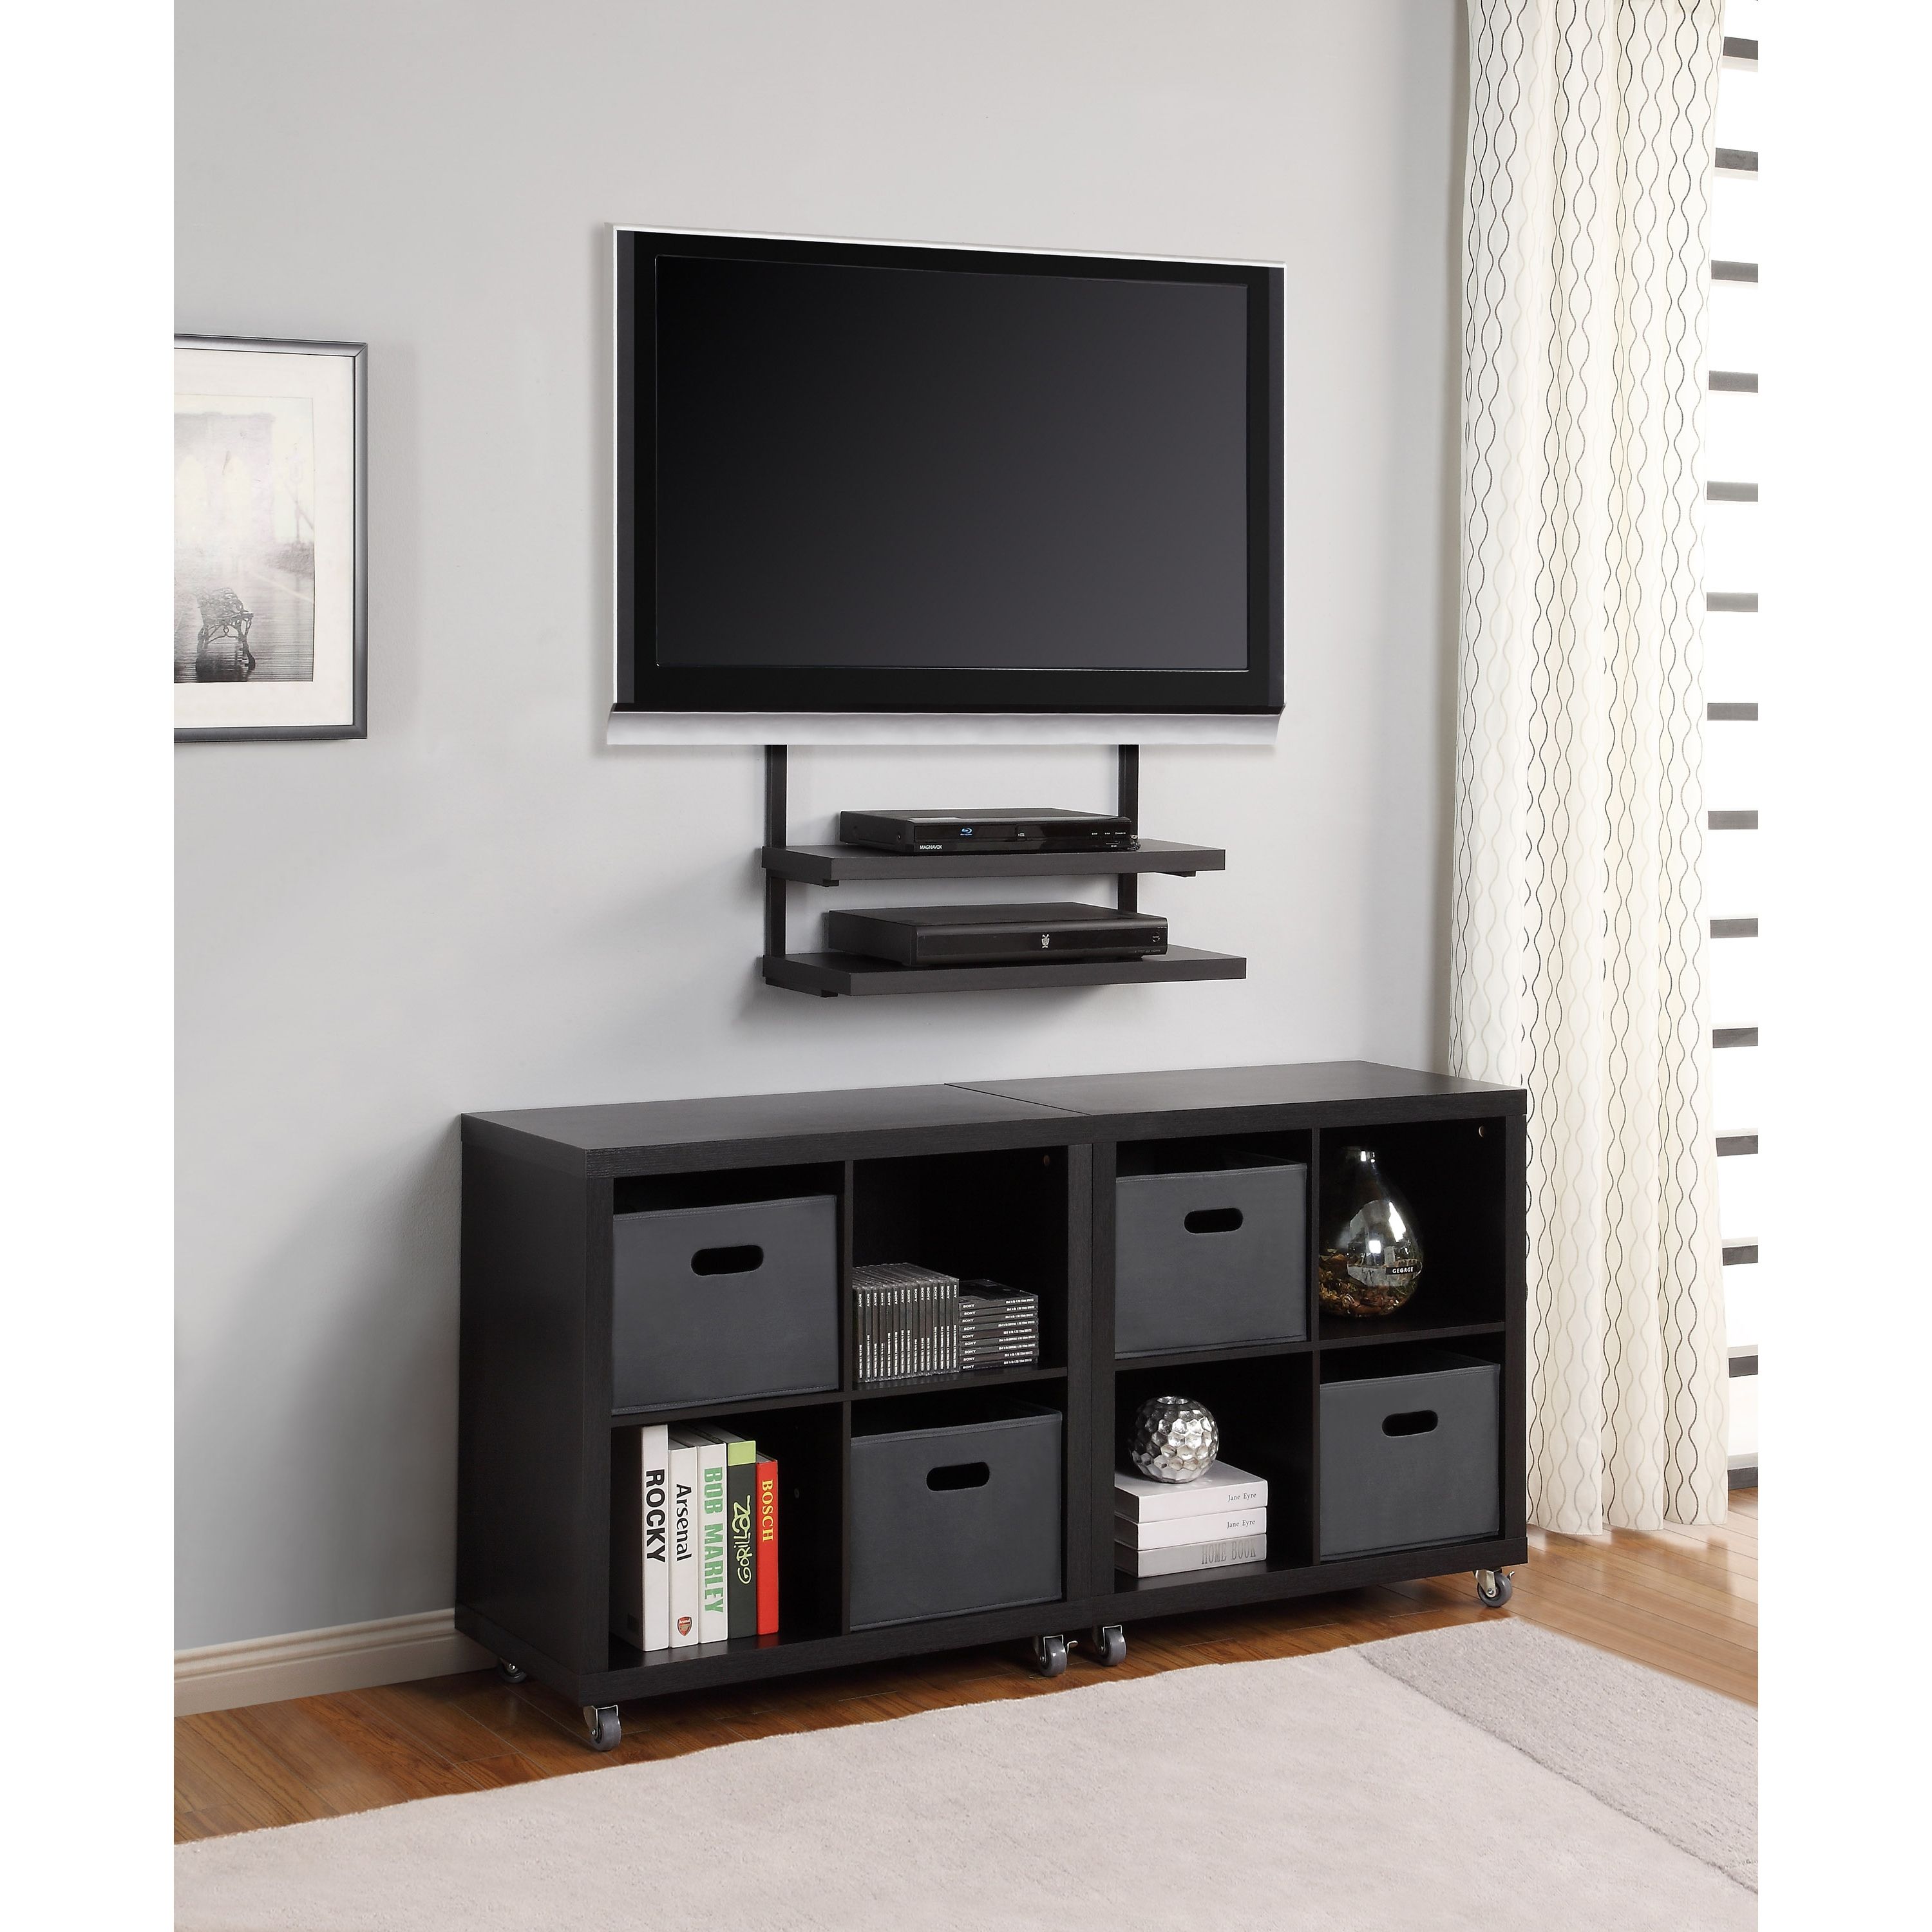 Flat Screen Tv Wall Racks Best Home Furniture Ideas With Regard To Flat Screen Shelving (View 1 of 15)